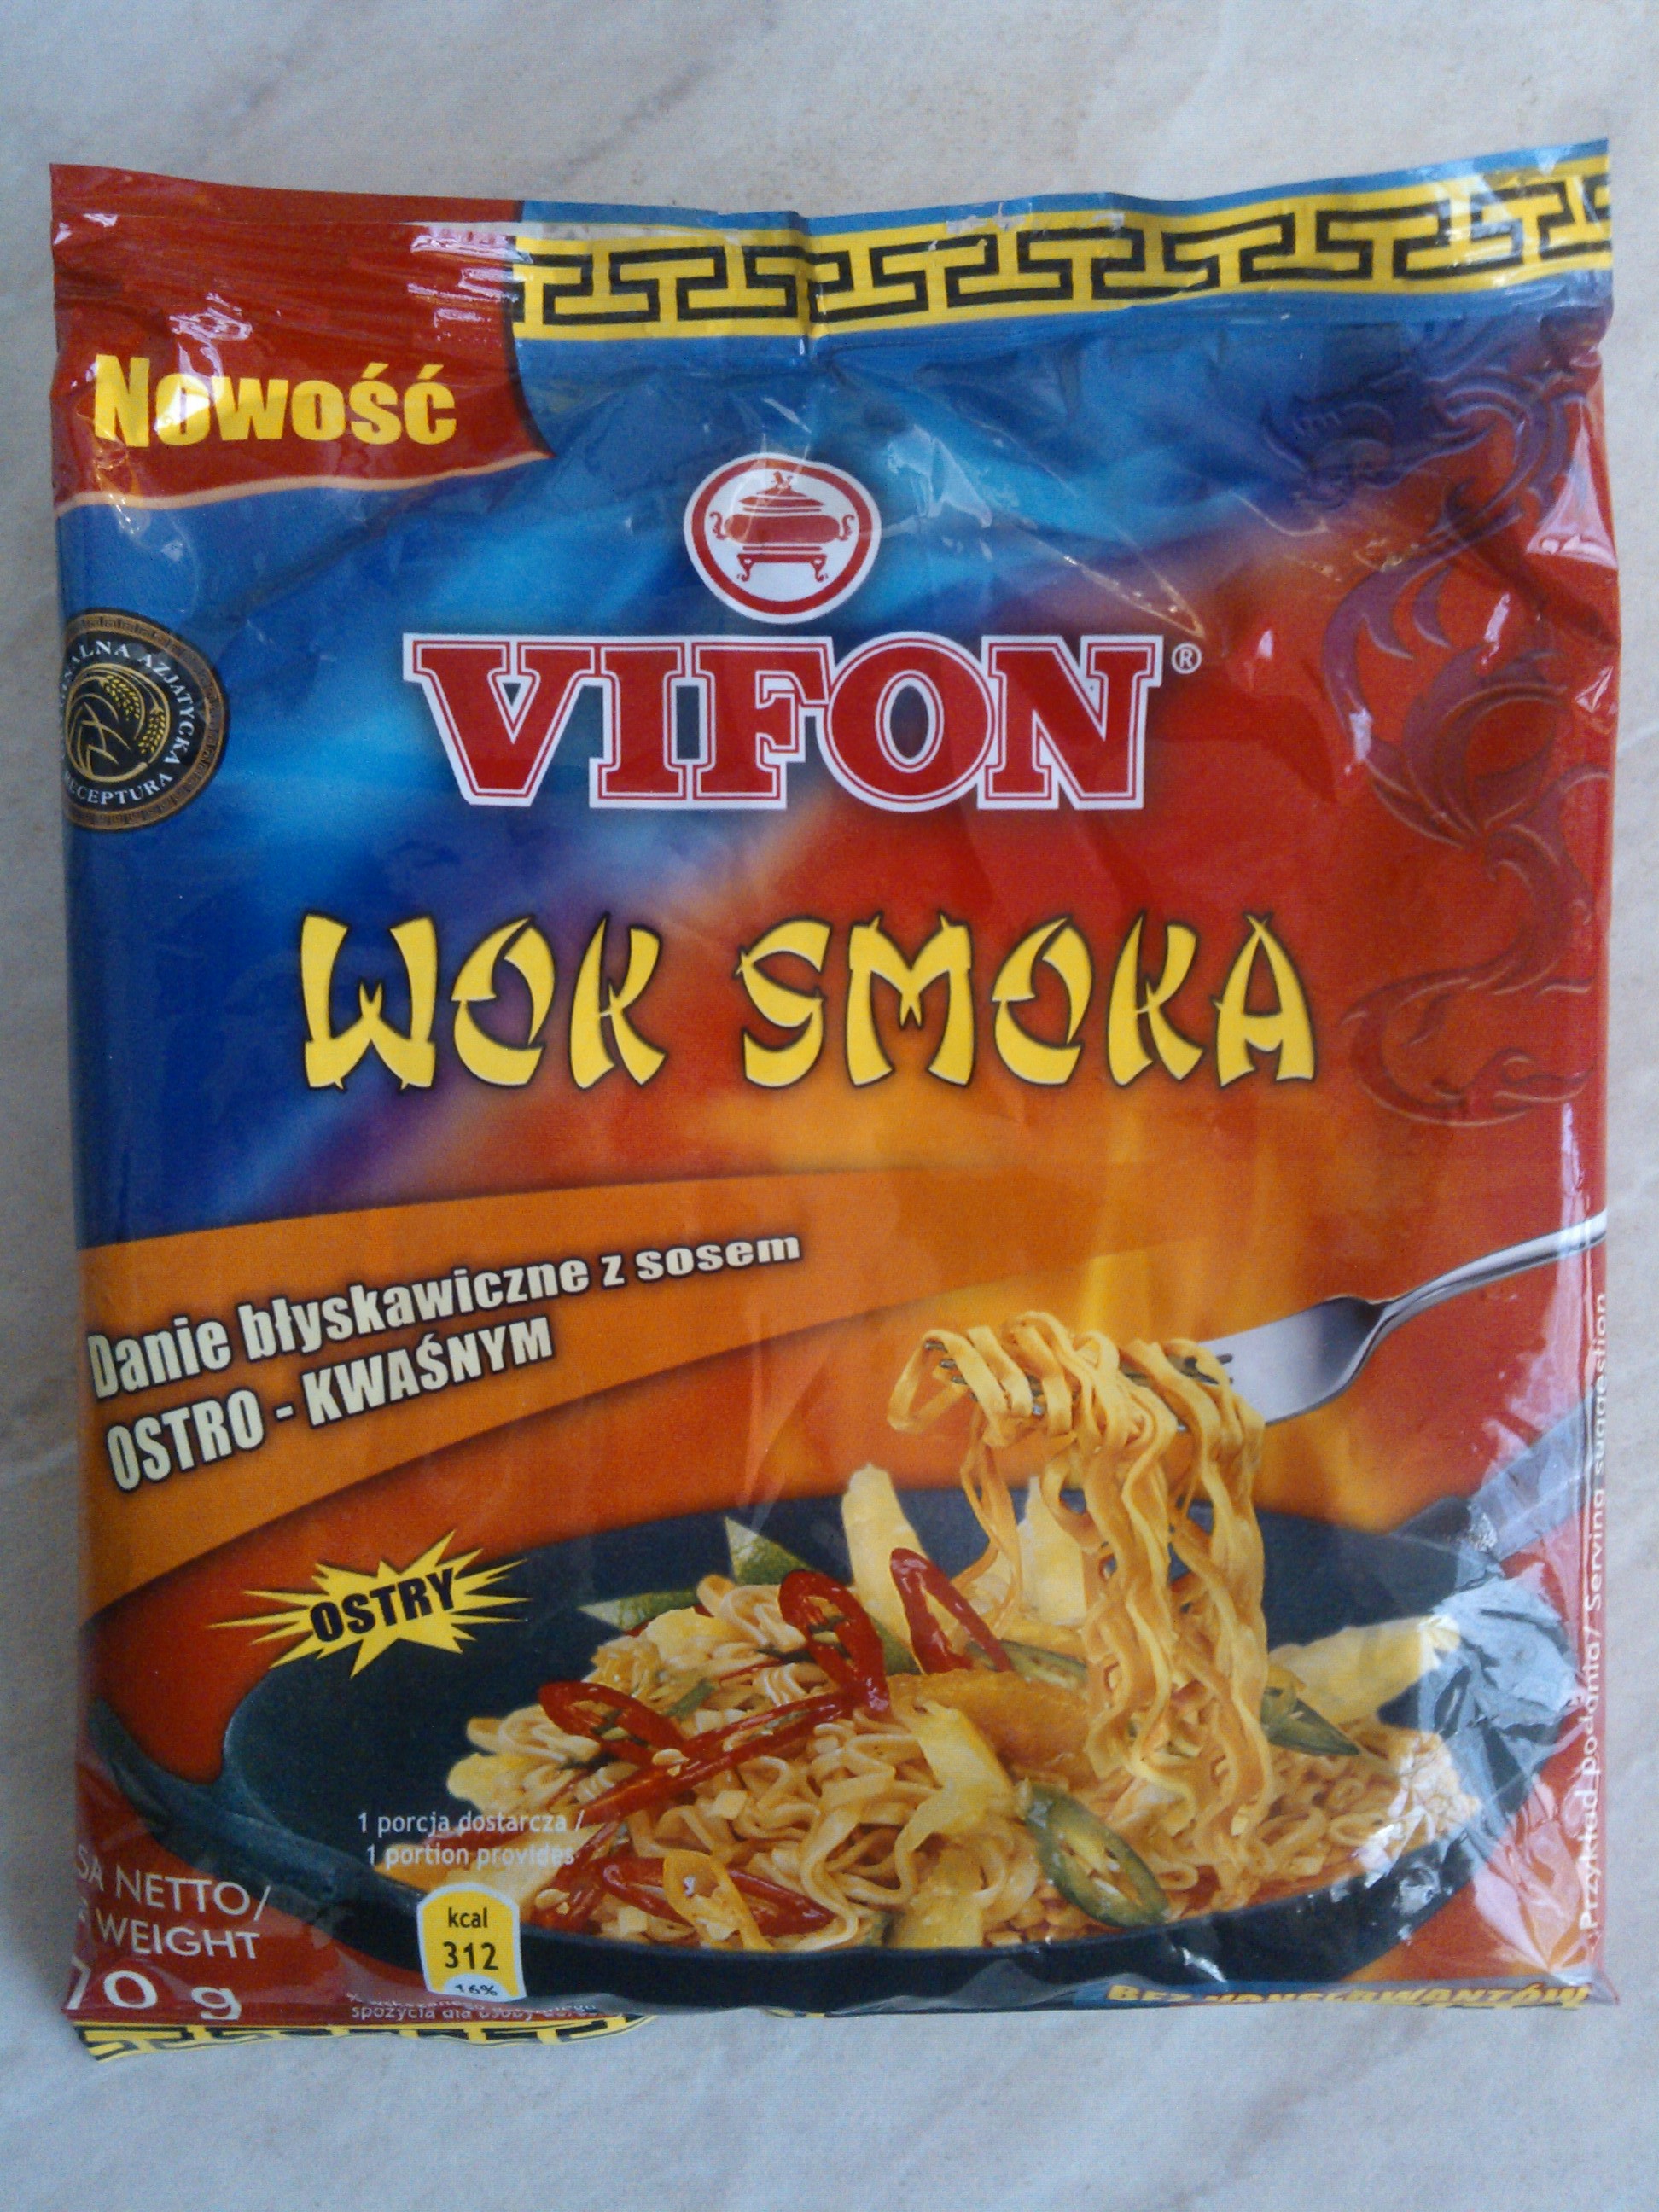 wok smocka.jpg